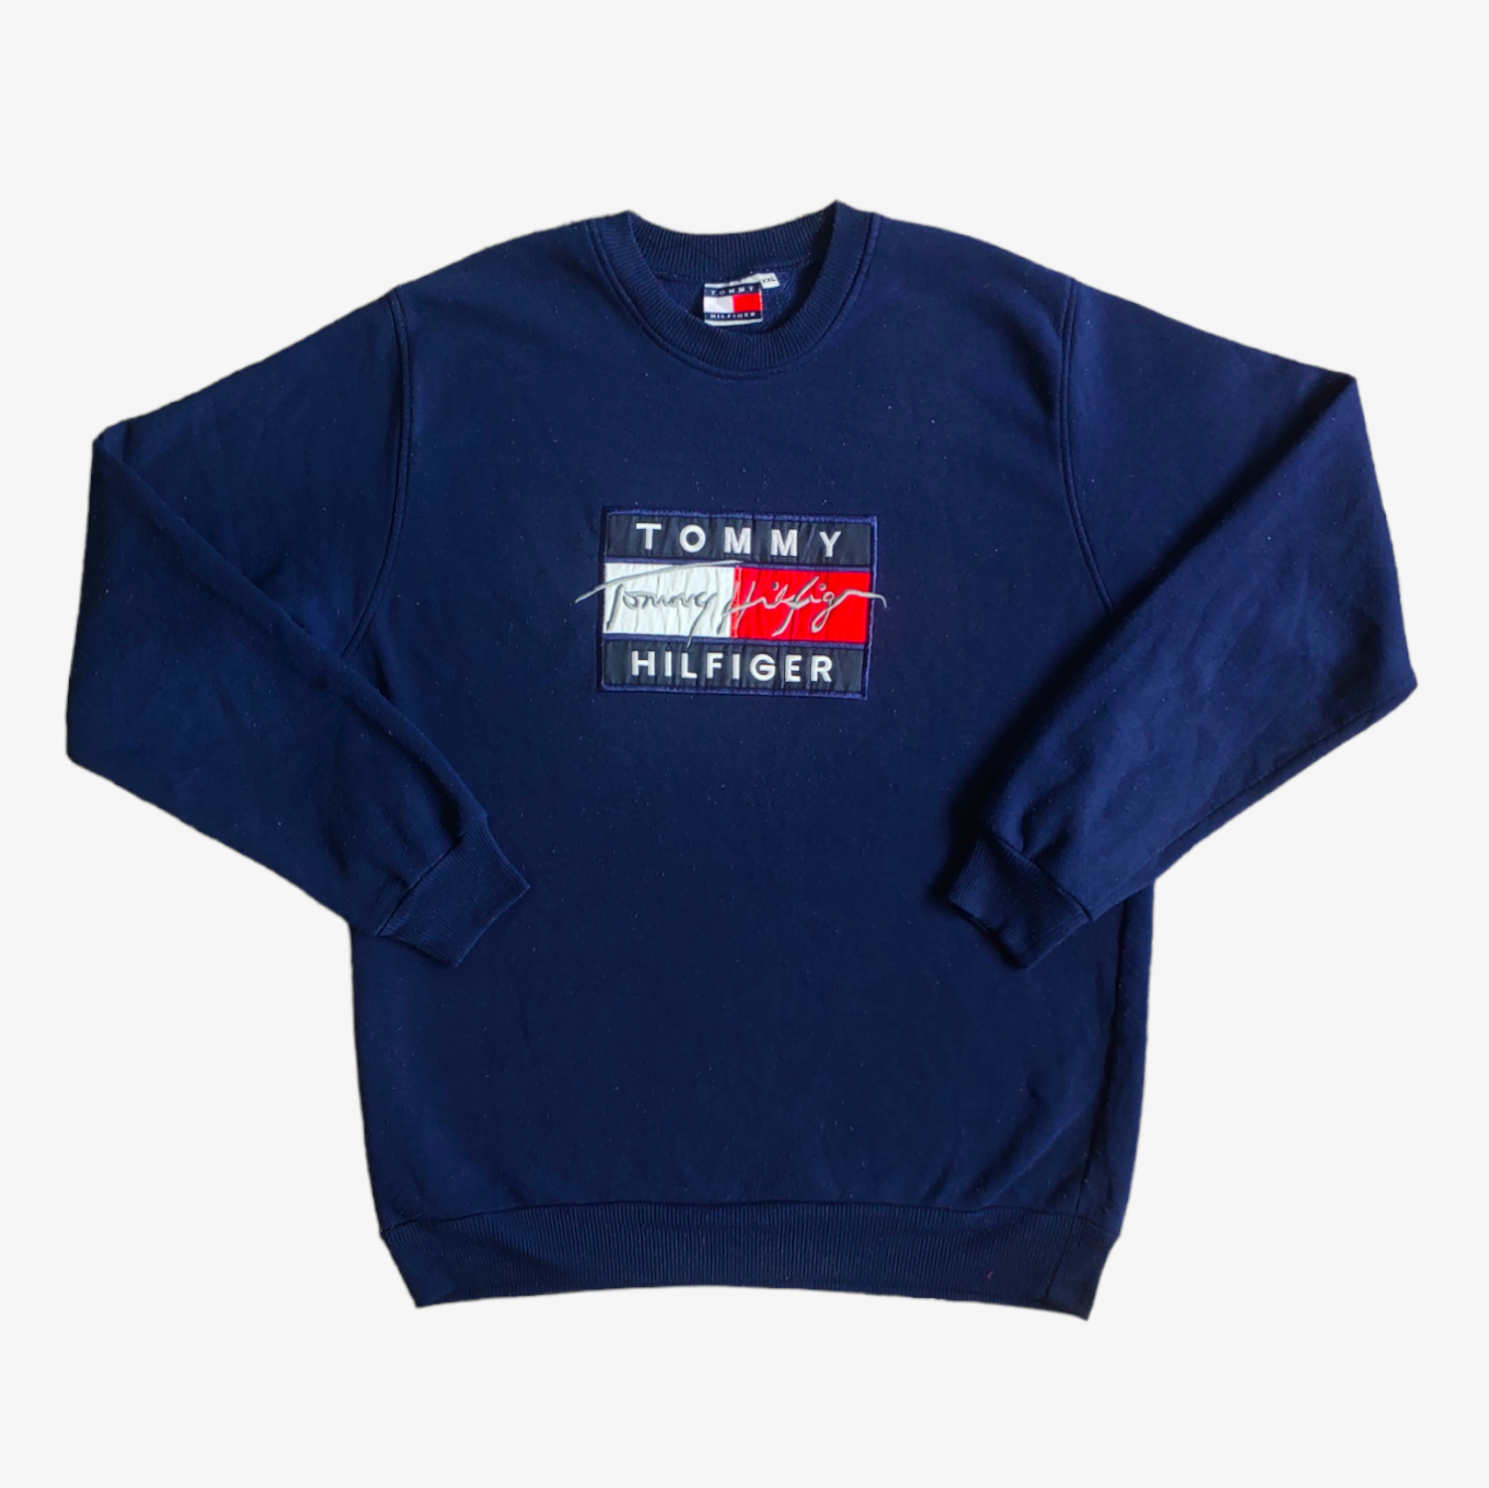 Vintage 90s Tommy Hilfiger Spell Out Logo Crewneck Sweatshirt - Casspios Dream